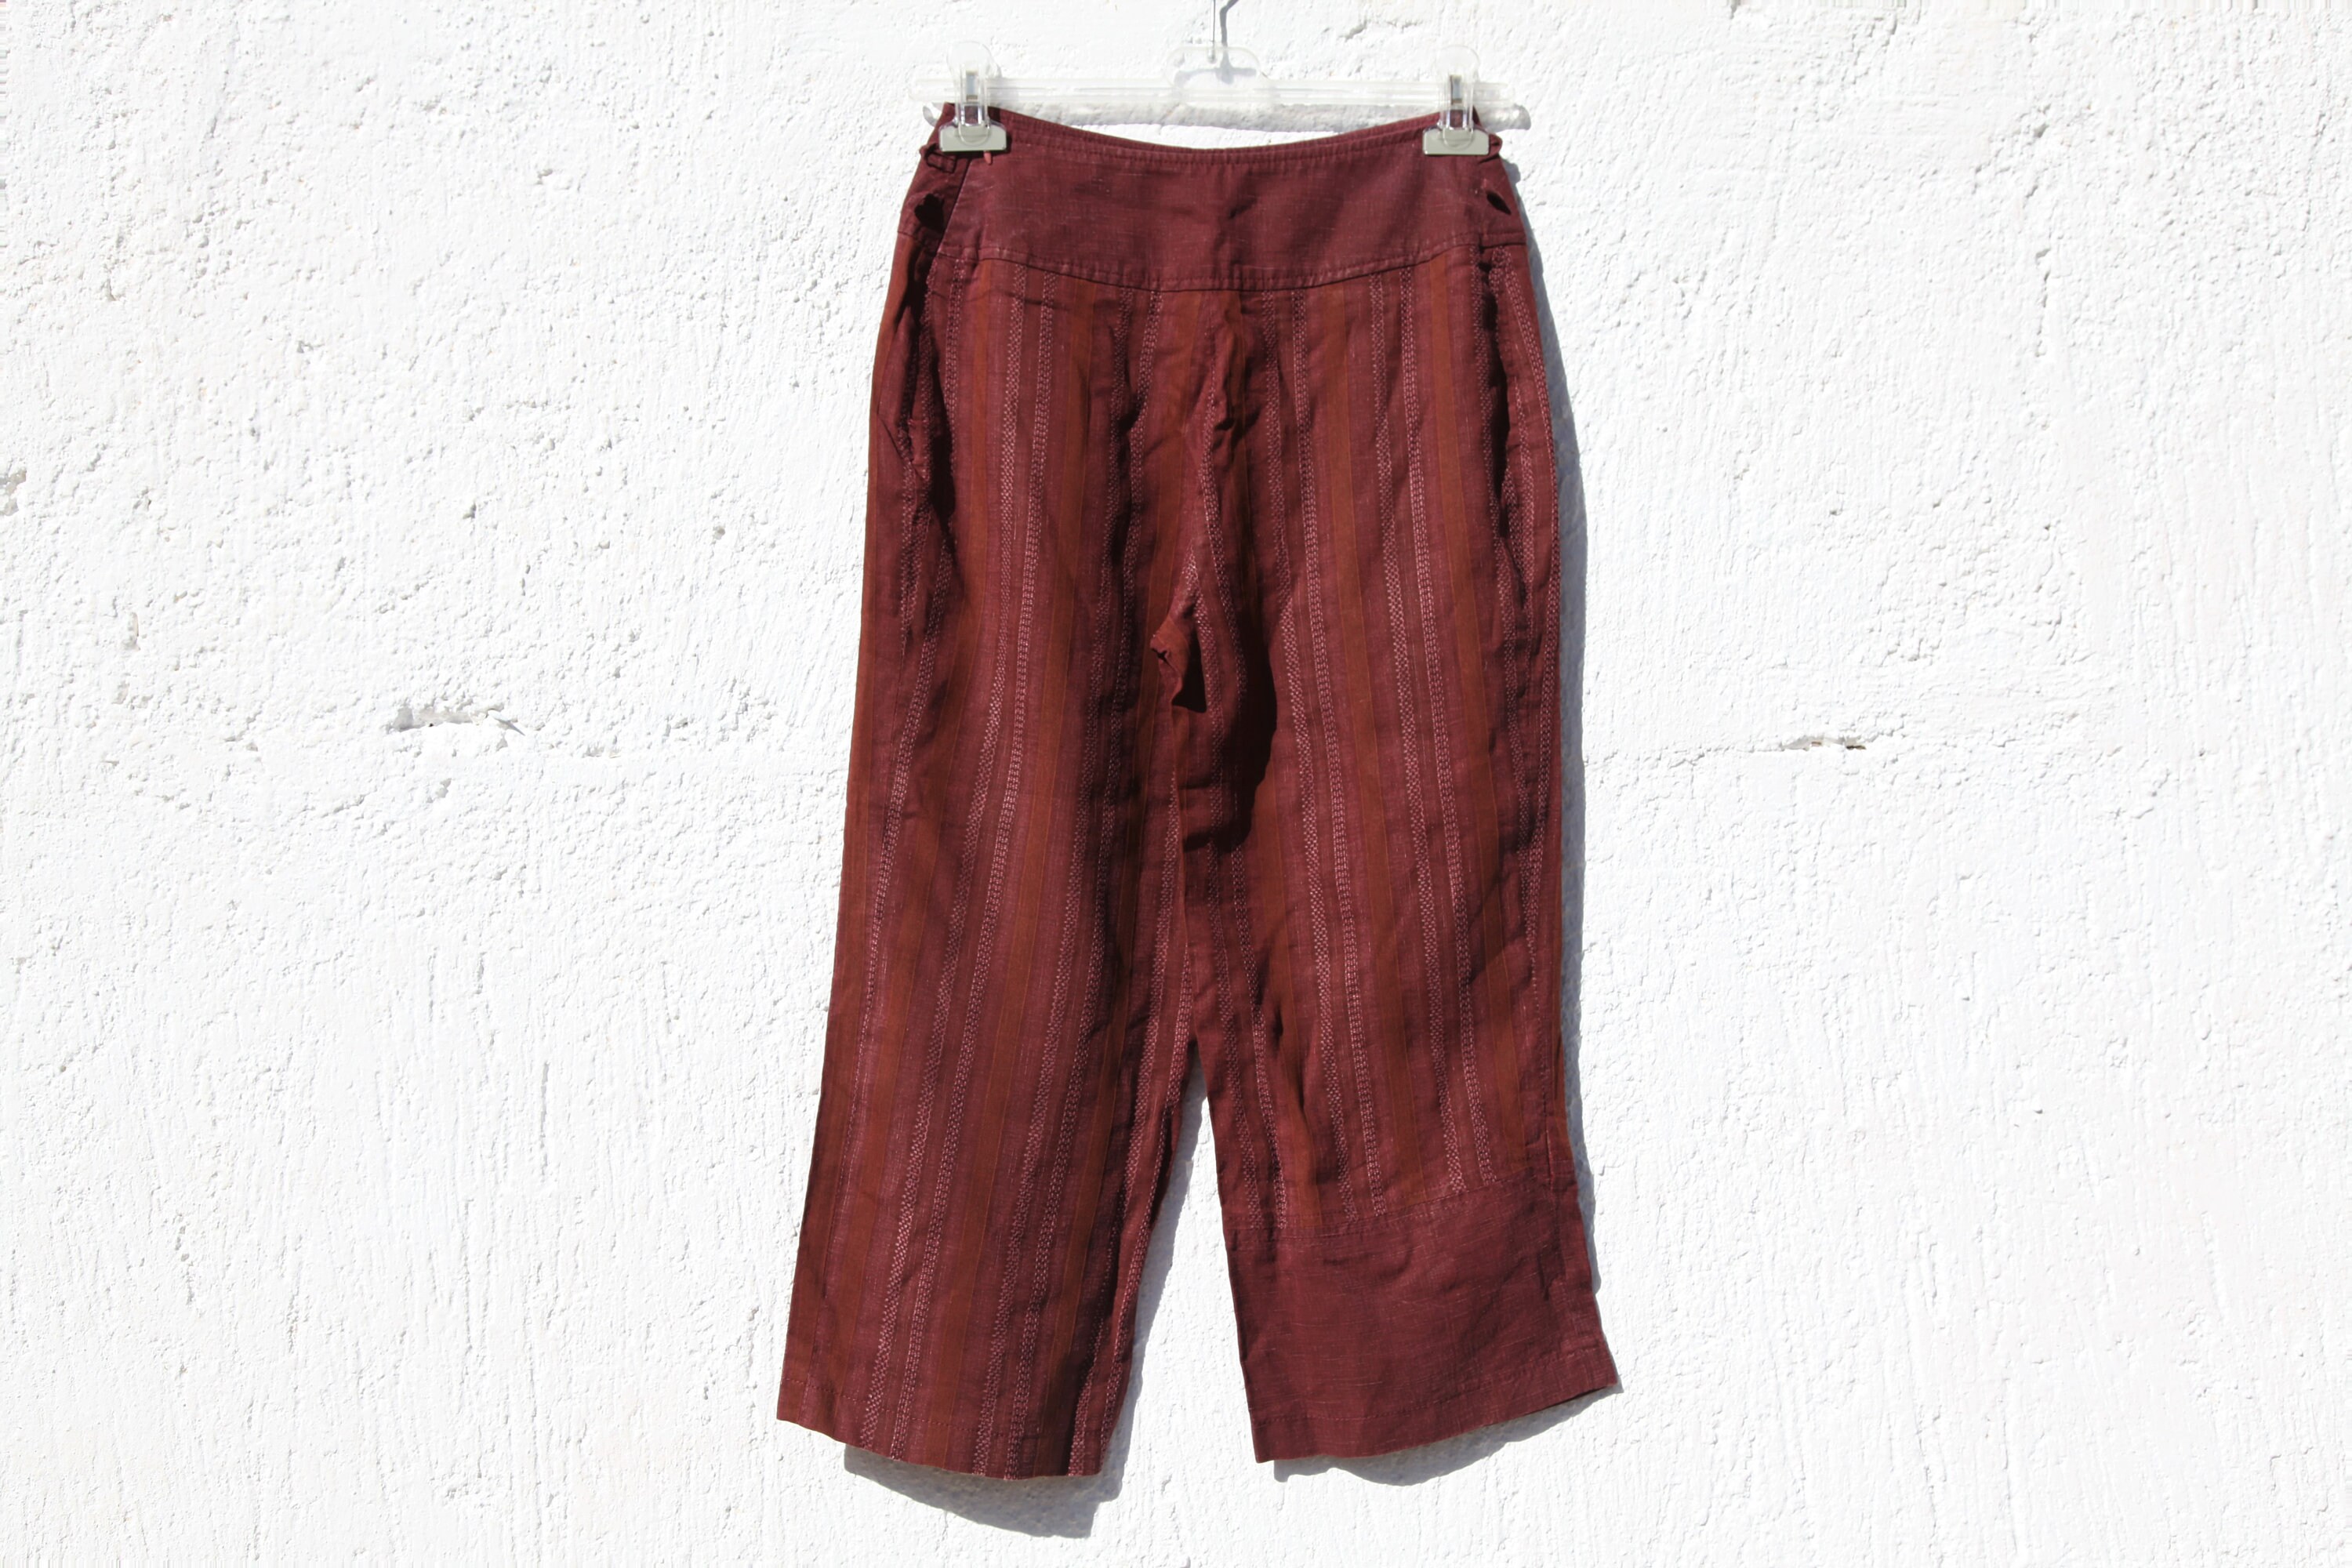 Deadstock Burgundy Red Viscose/linen Capri Pants.size Gr-44 xs/s